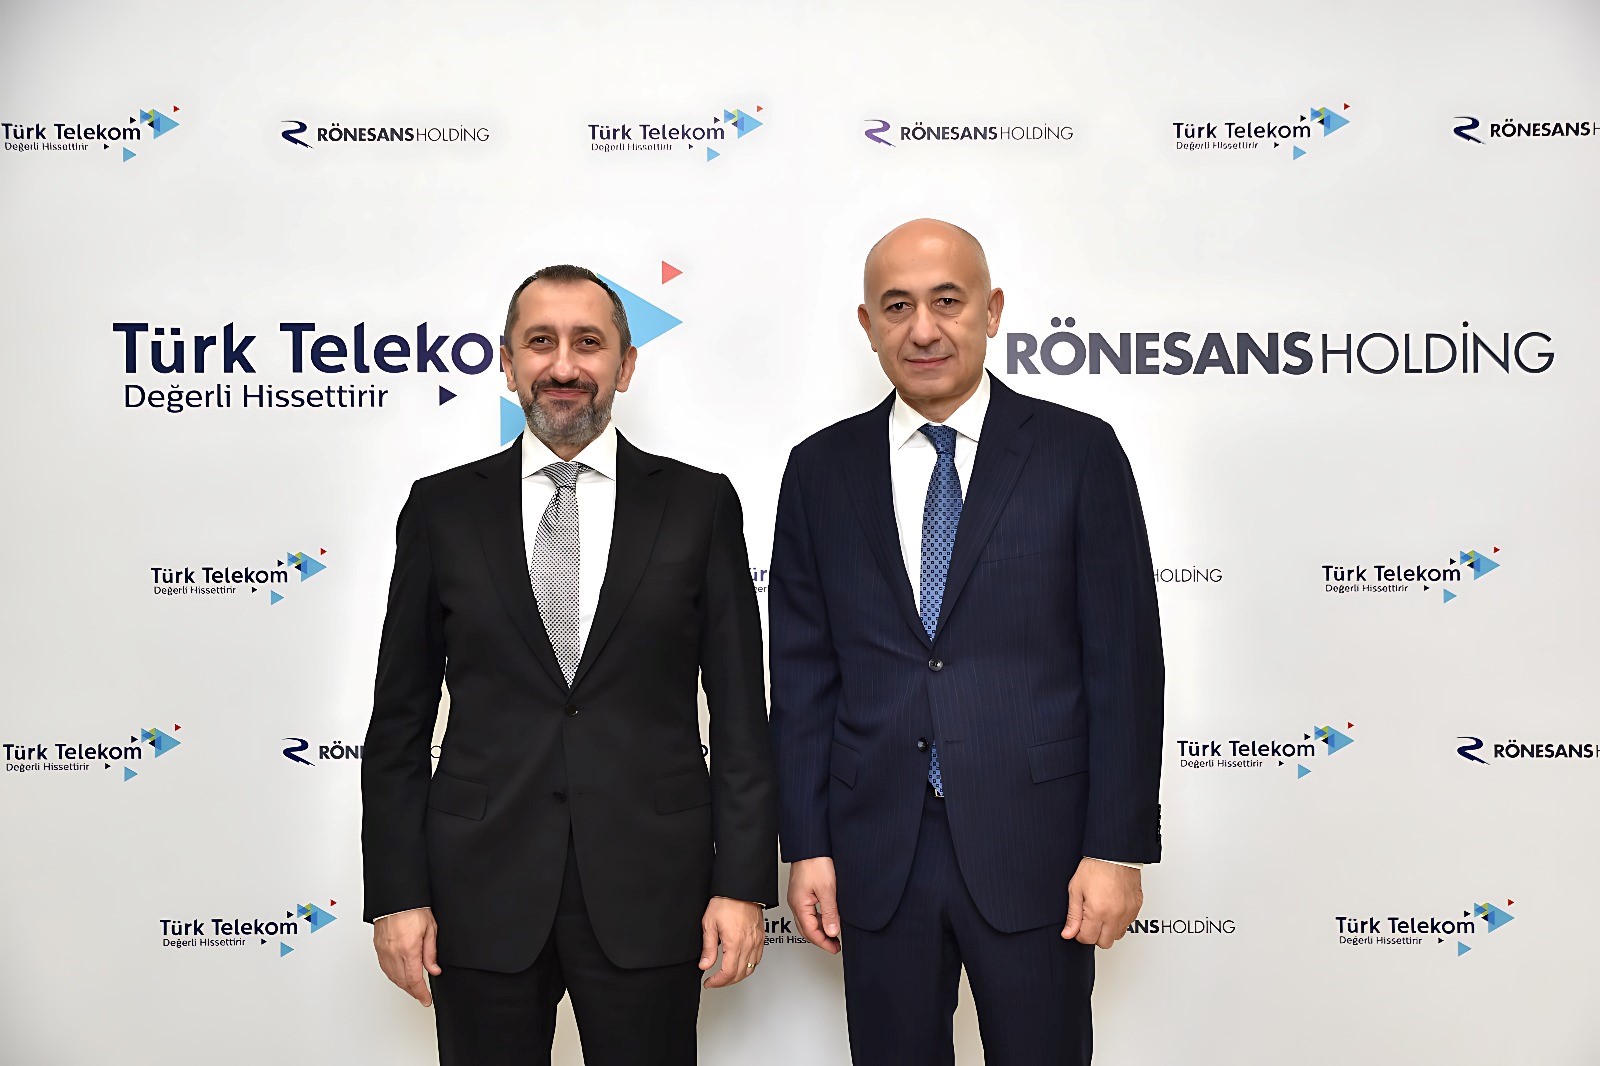 turk-telekom-ve-ronesans-holding-guclerini-dijitallesme-alaninda-bulusturdu-4ClXrscO.jpg